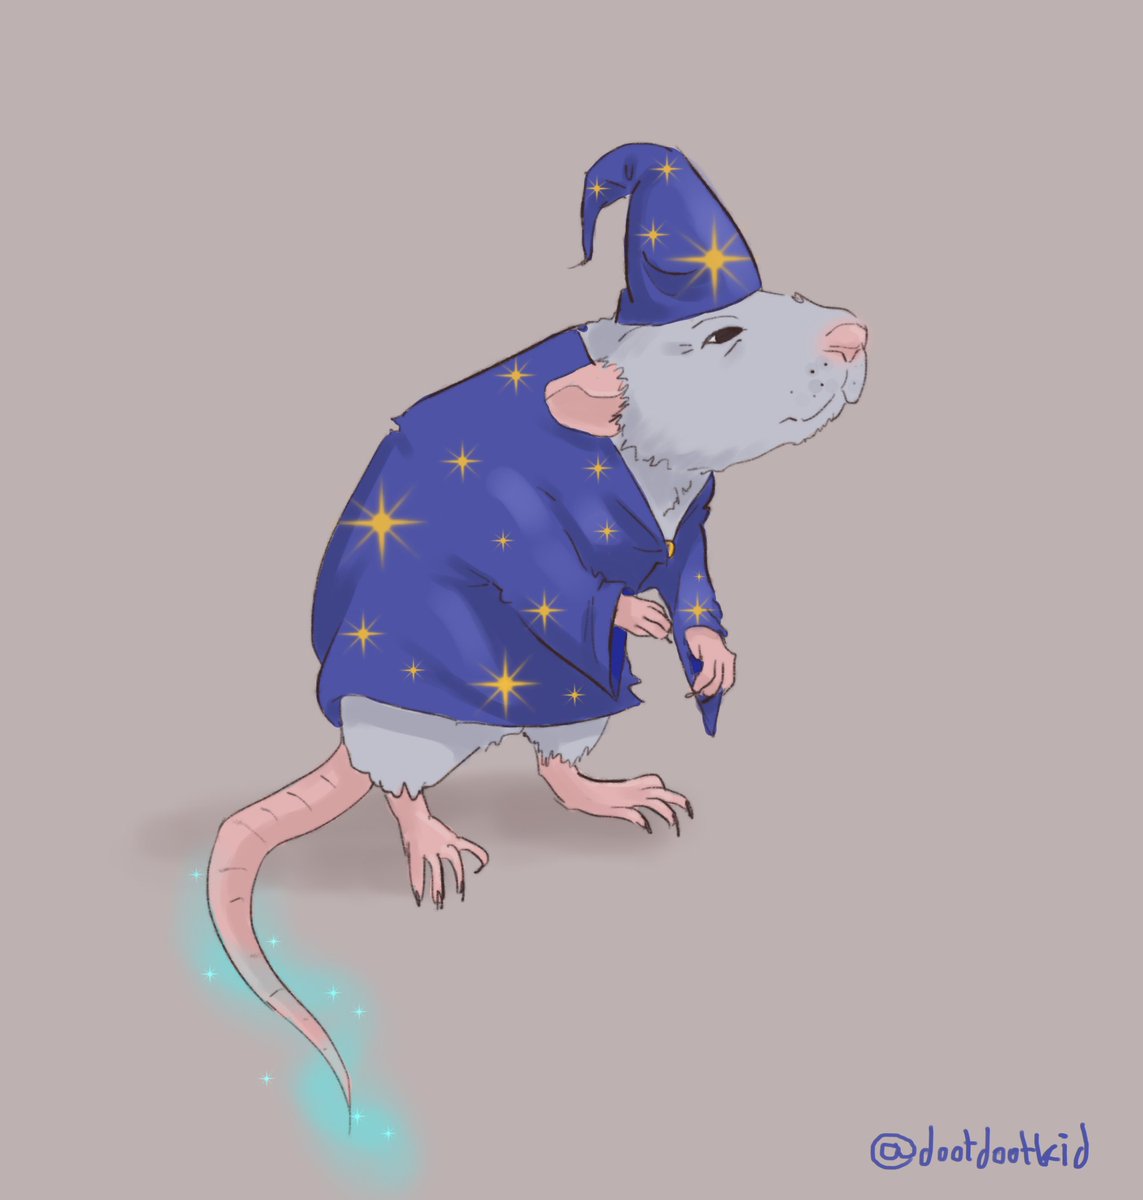 a magical fellow 🪄

#rat #rats #wizard #art #aotd #ratart